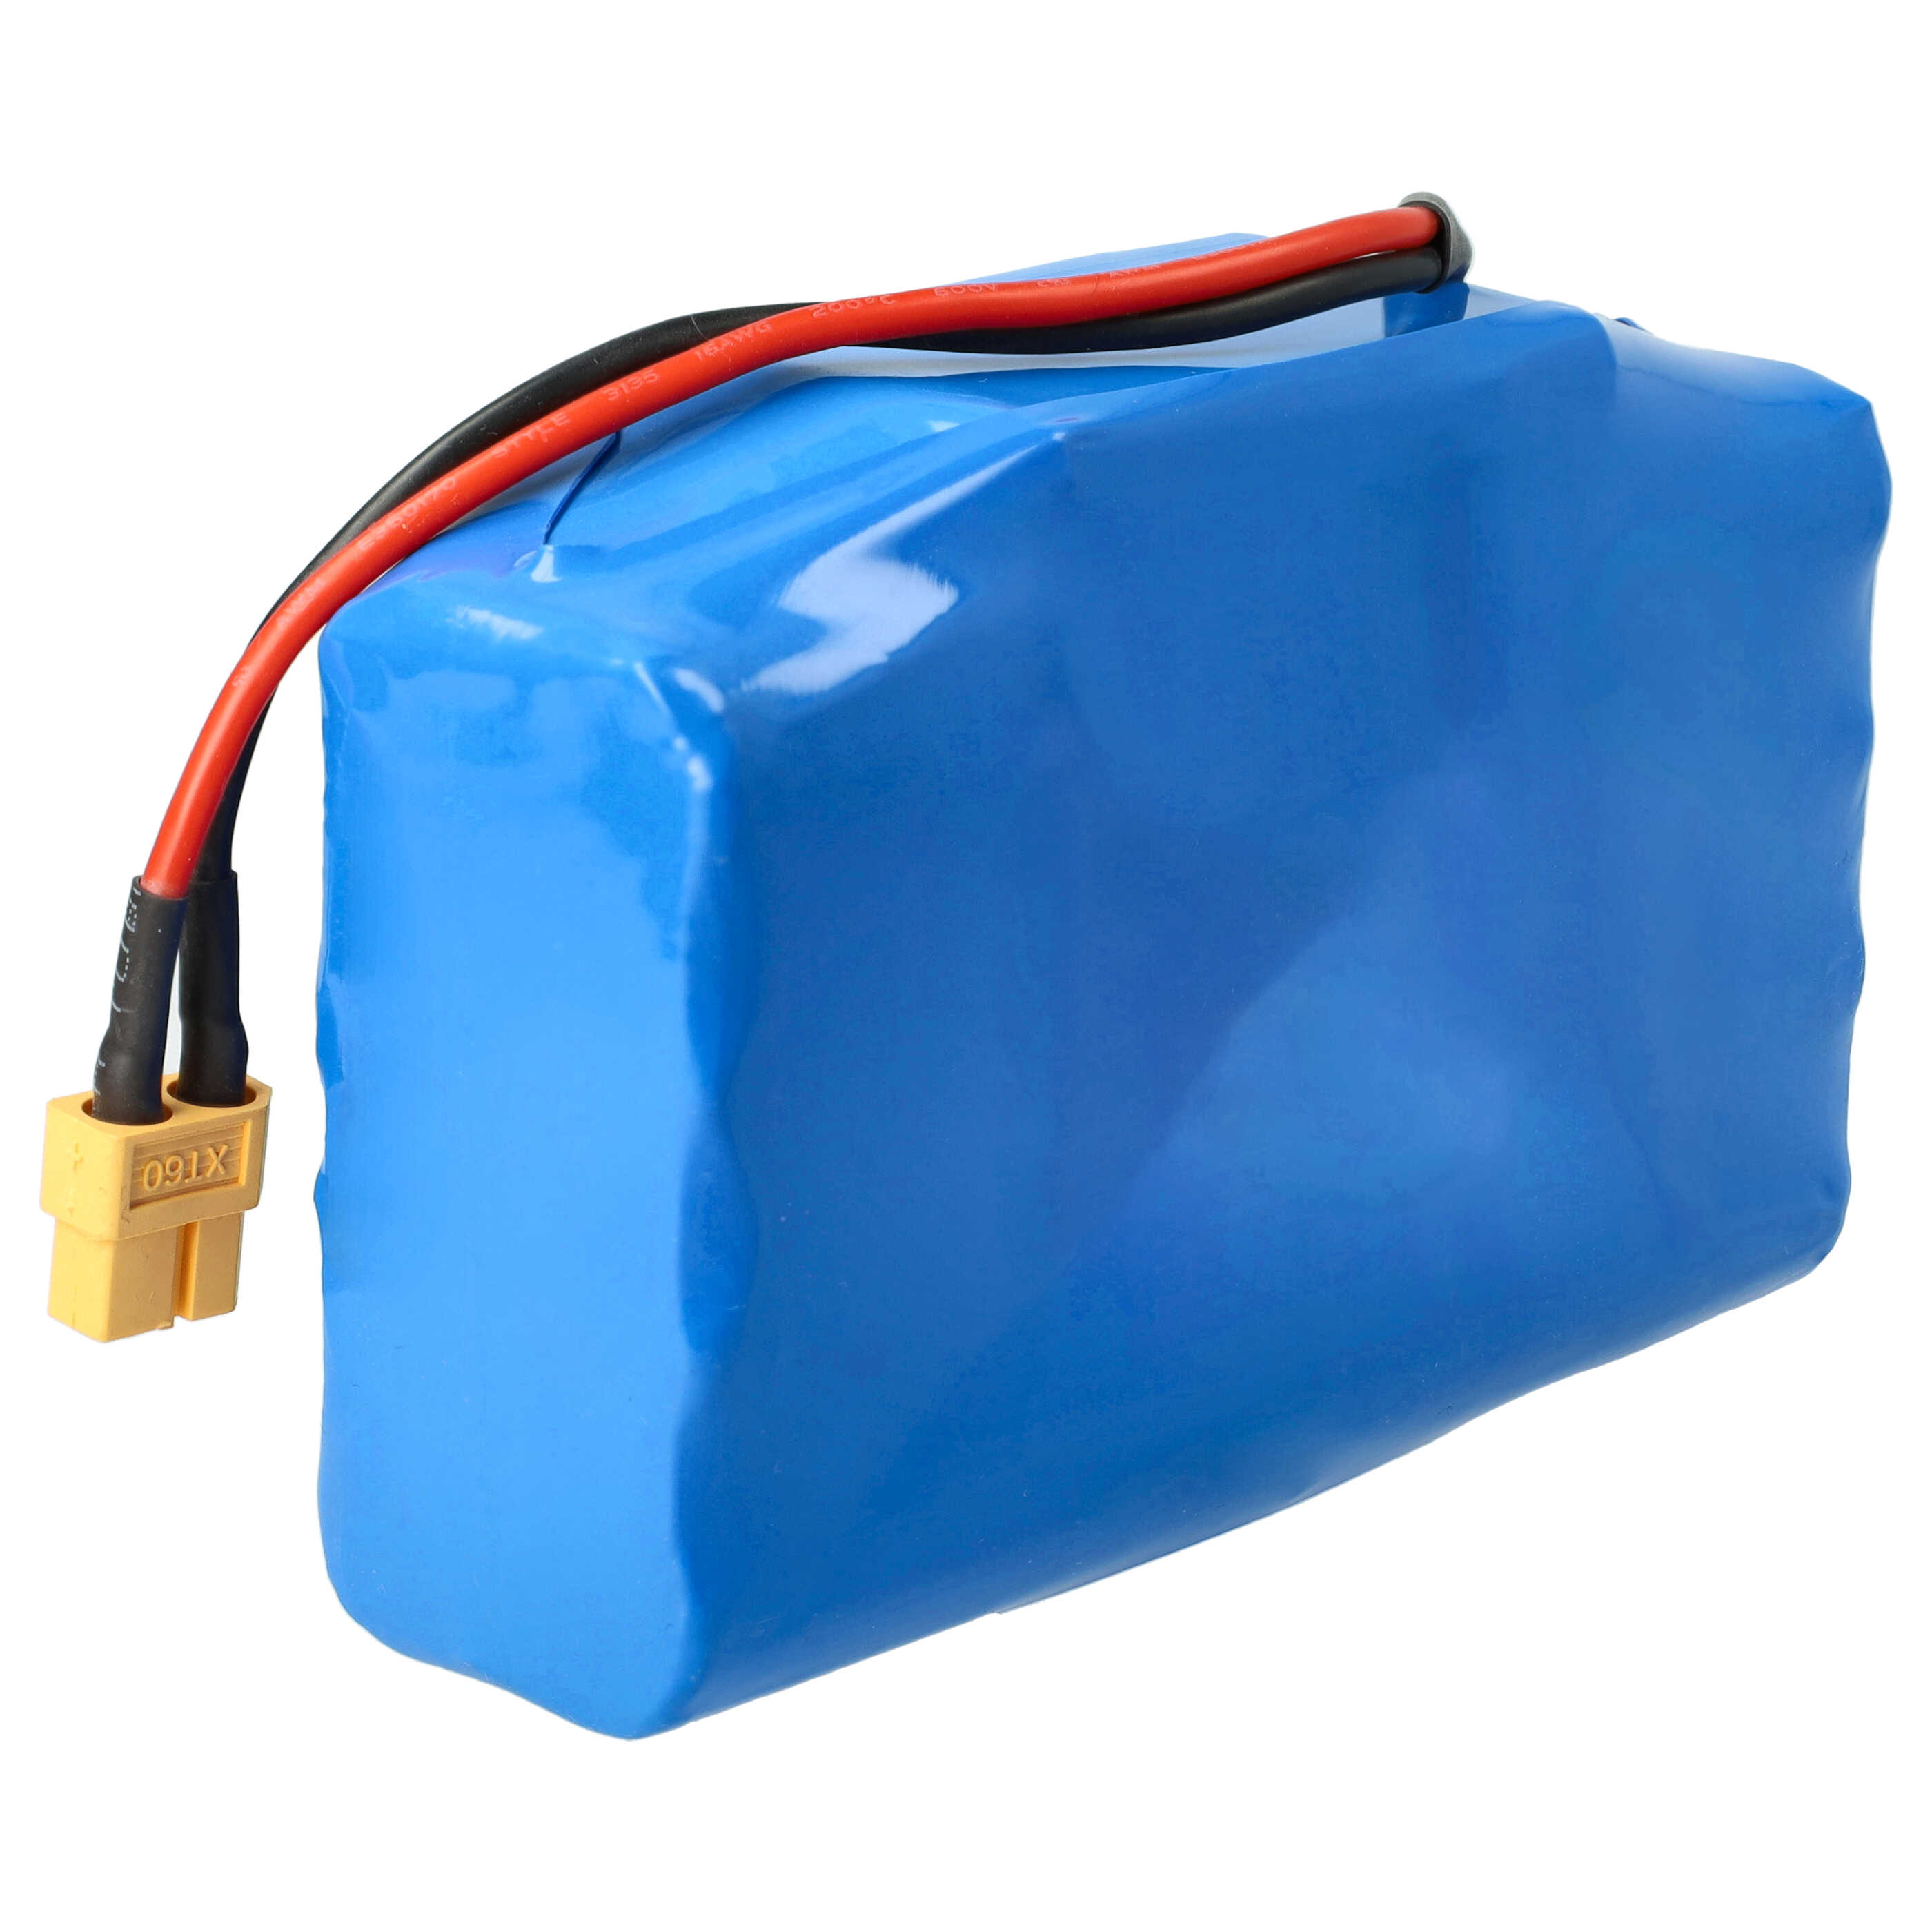 E-Board Battery Replacement for Bluewheel 10IXR19/65-2, HPK-11 - 4400mAh 36V Li-Ion